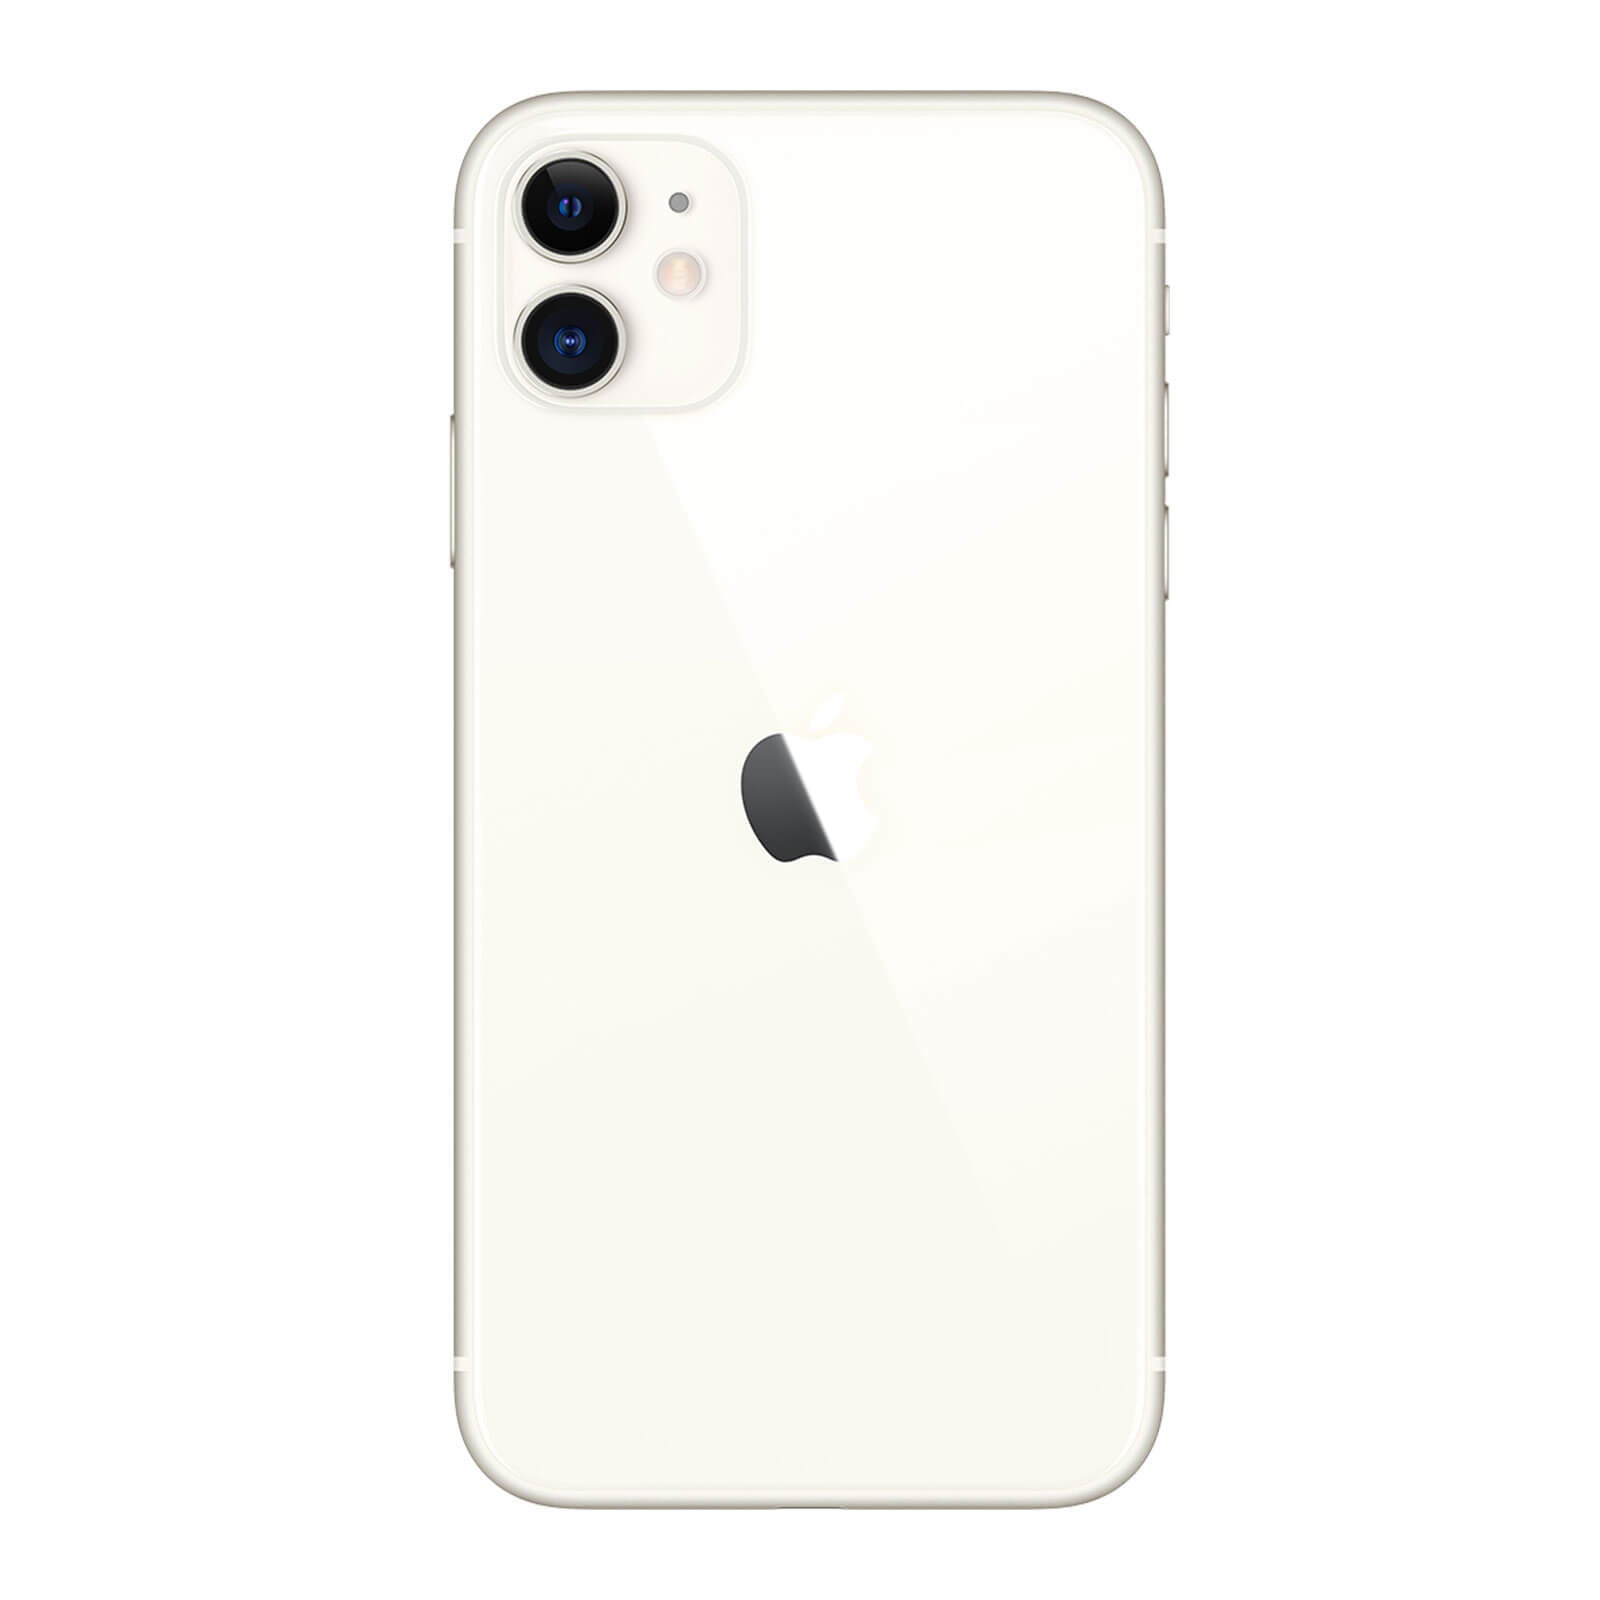 Apple iPhone 11 64GB White Fair - Unlocked